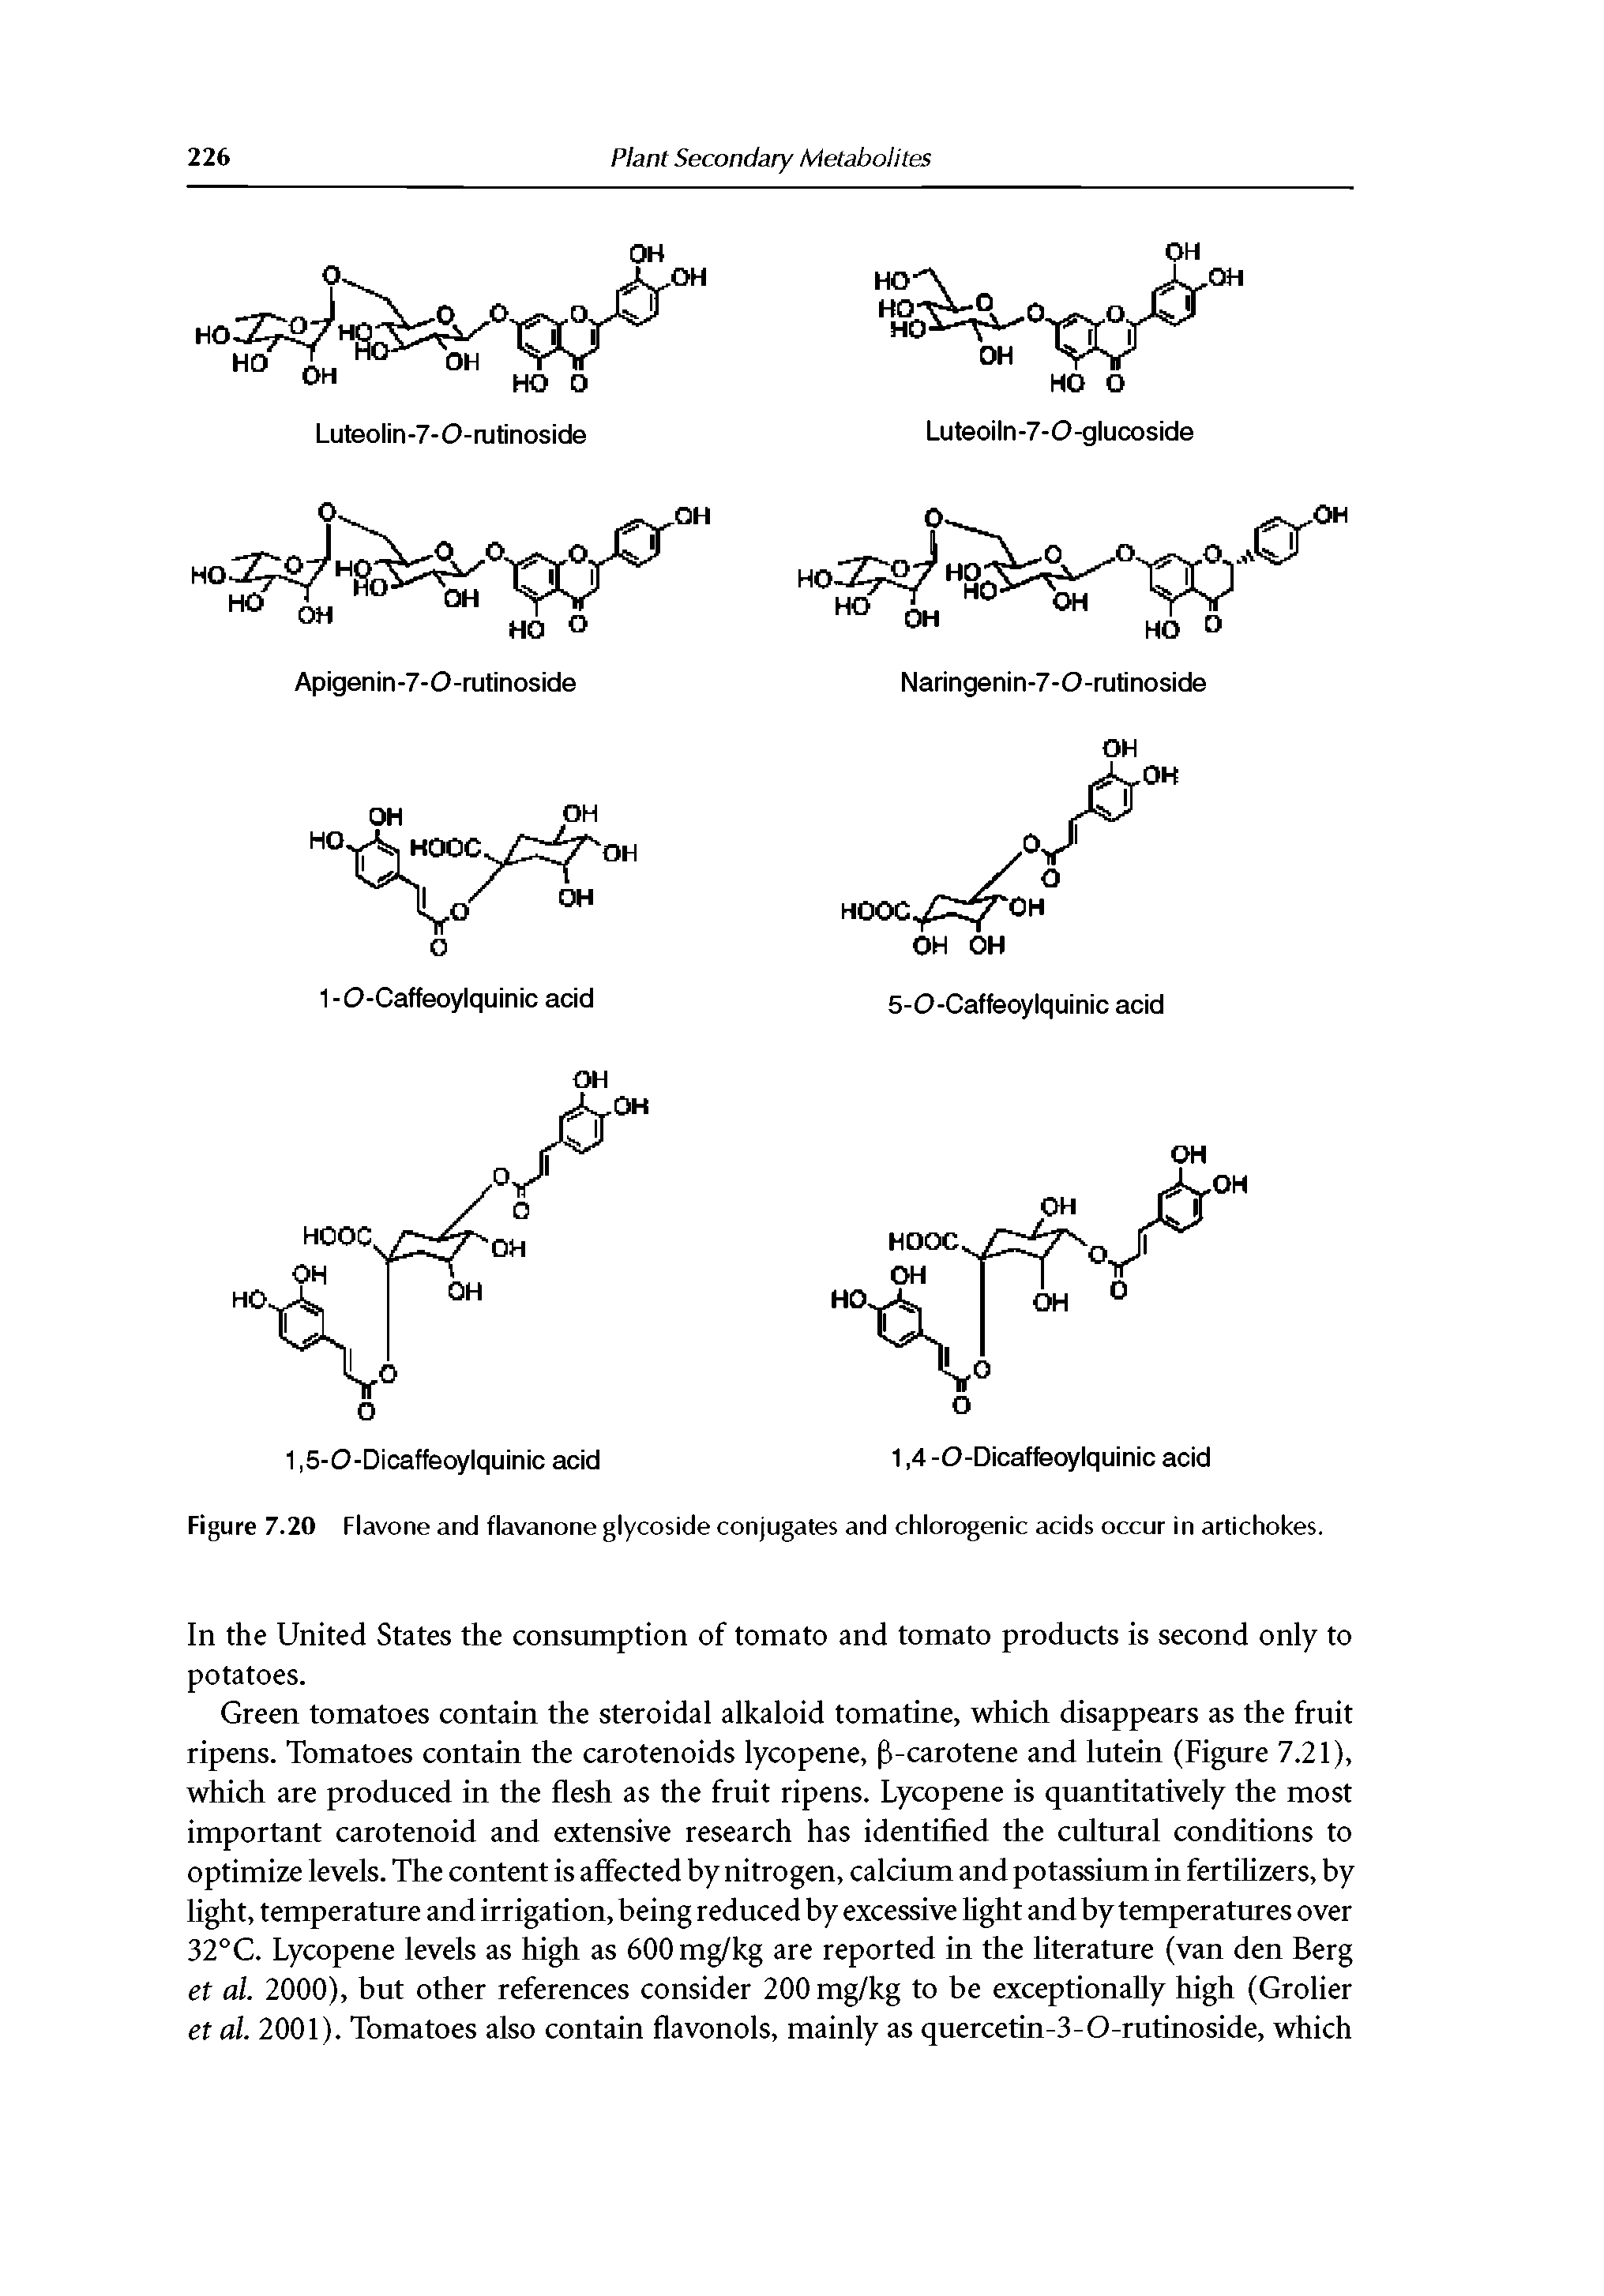 Figure 7.20 Flavone and flavanone glycoside conjugates and chlorogenic acids occur in artichokes.